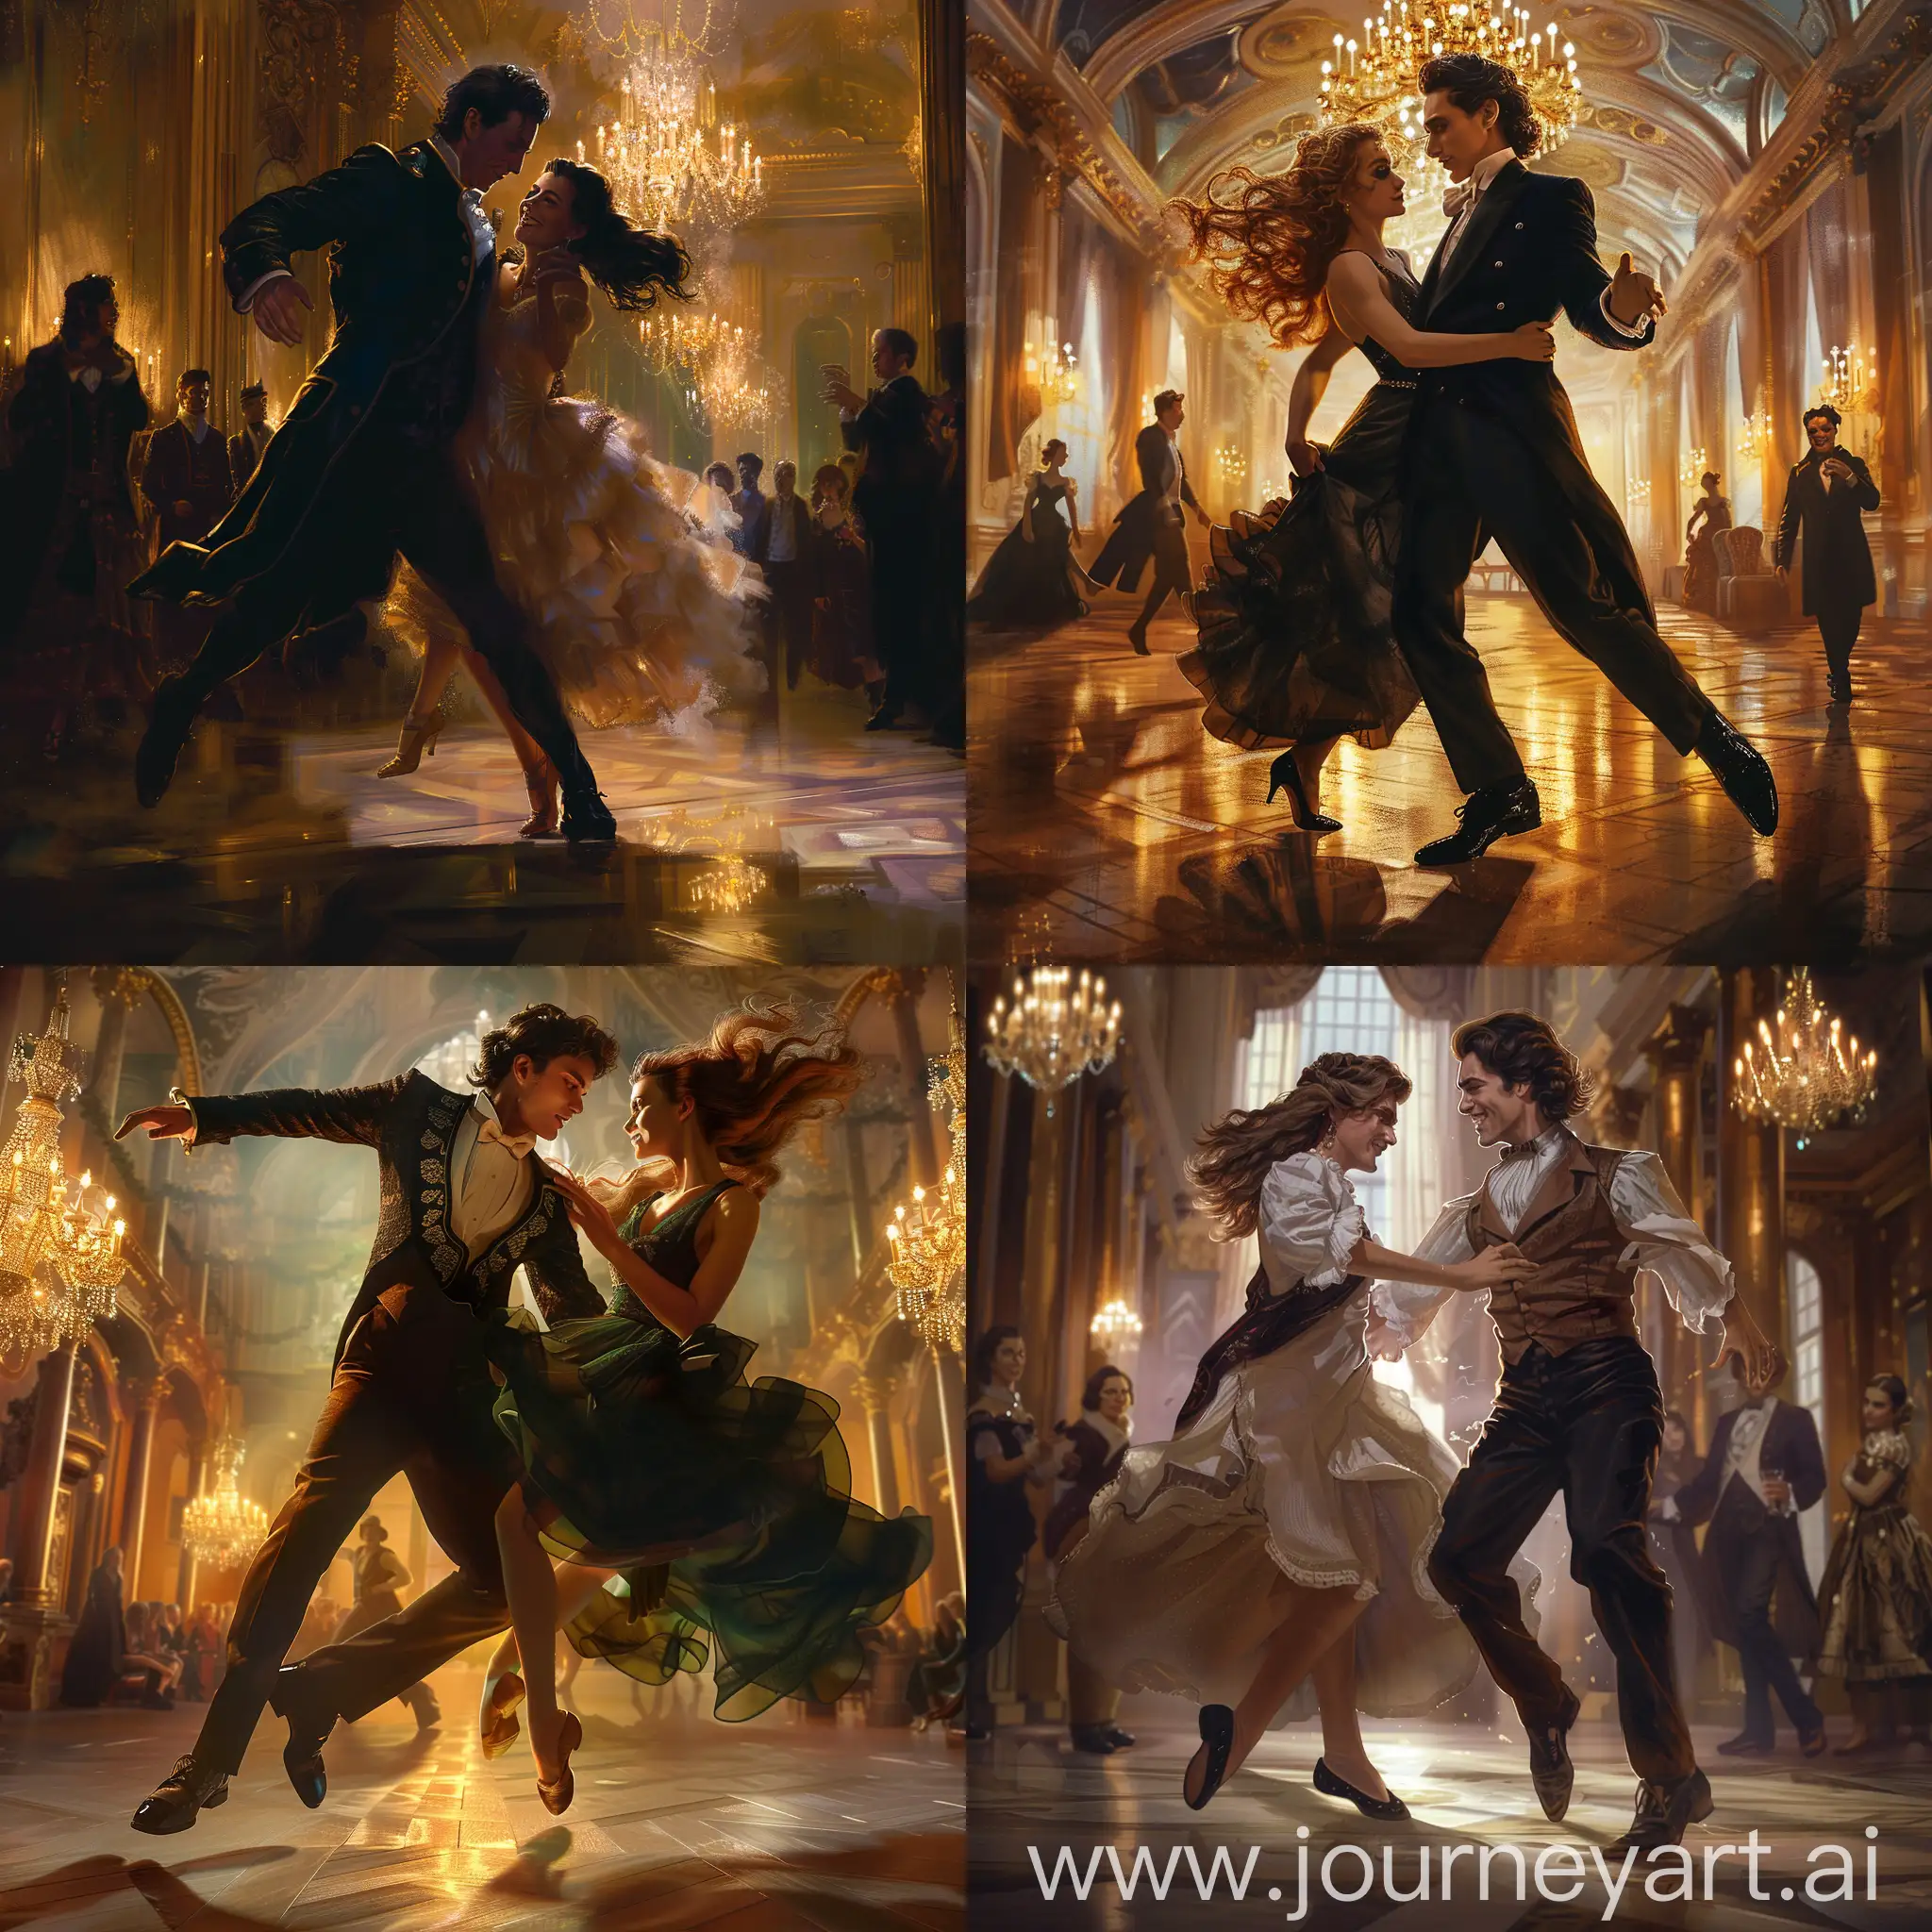 Elegant-Ballroom-Dance-Tom-Riddle-and-Partner-Twirl-Amid-Festive-Grandeur